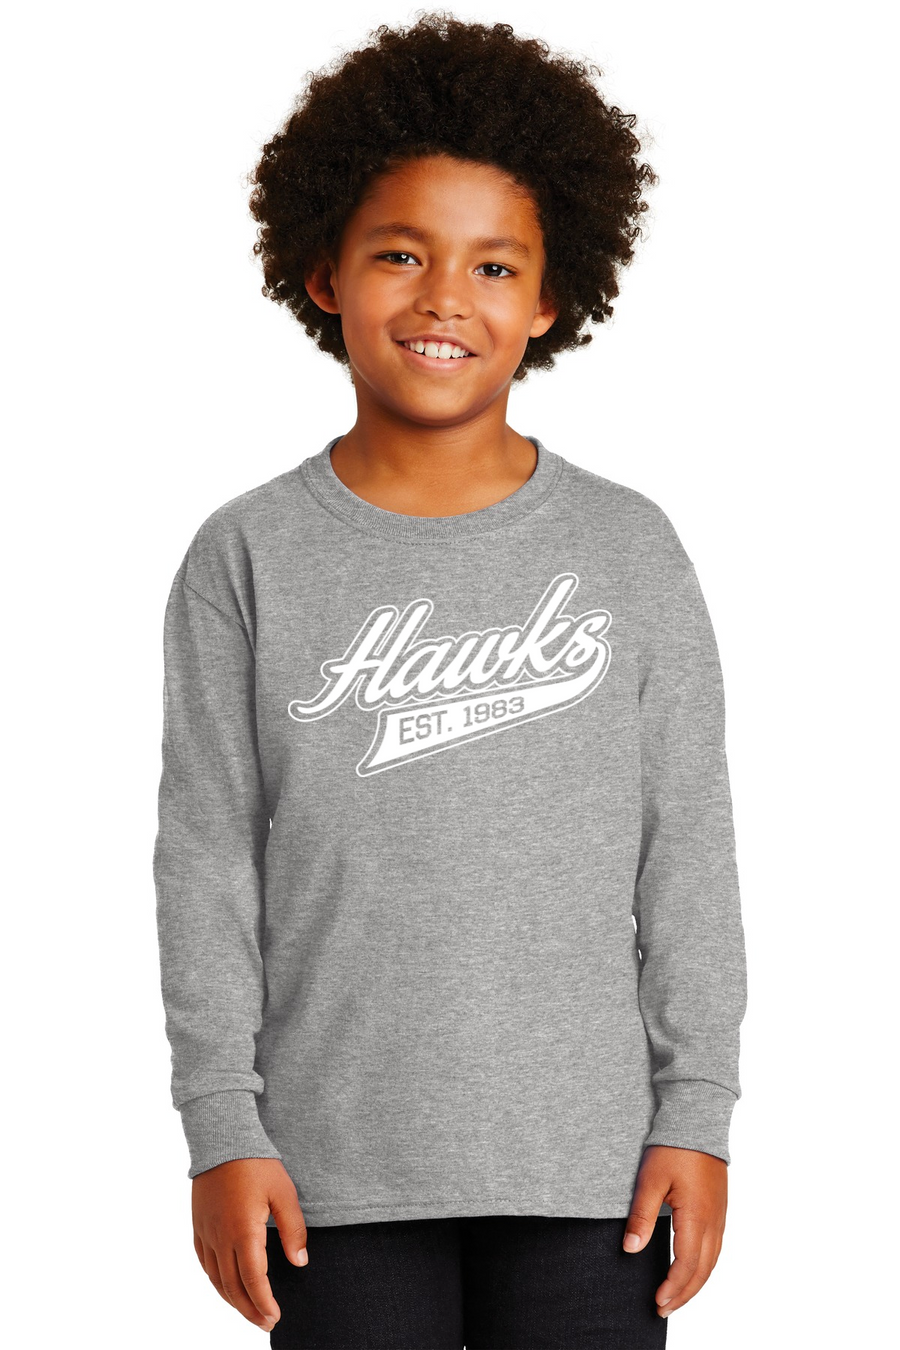 Holcomb Bridge Middle School Spirit Wear 23/24 On-Demand-Unisex Long Sleeve Shirt Cursive Hawks Logo